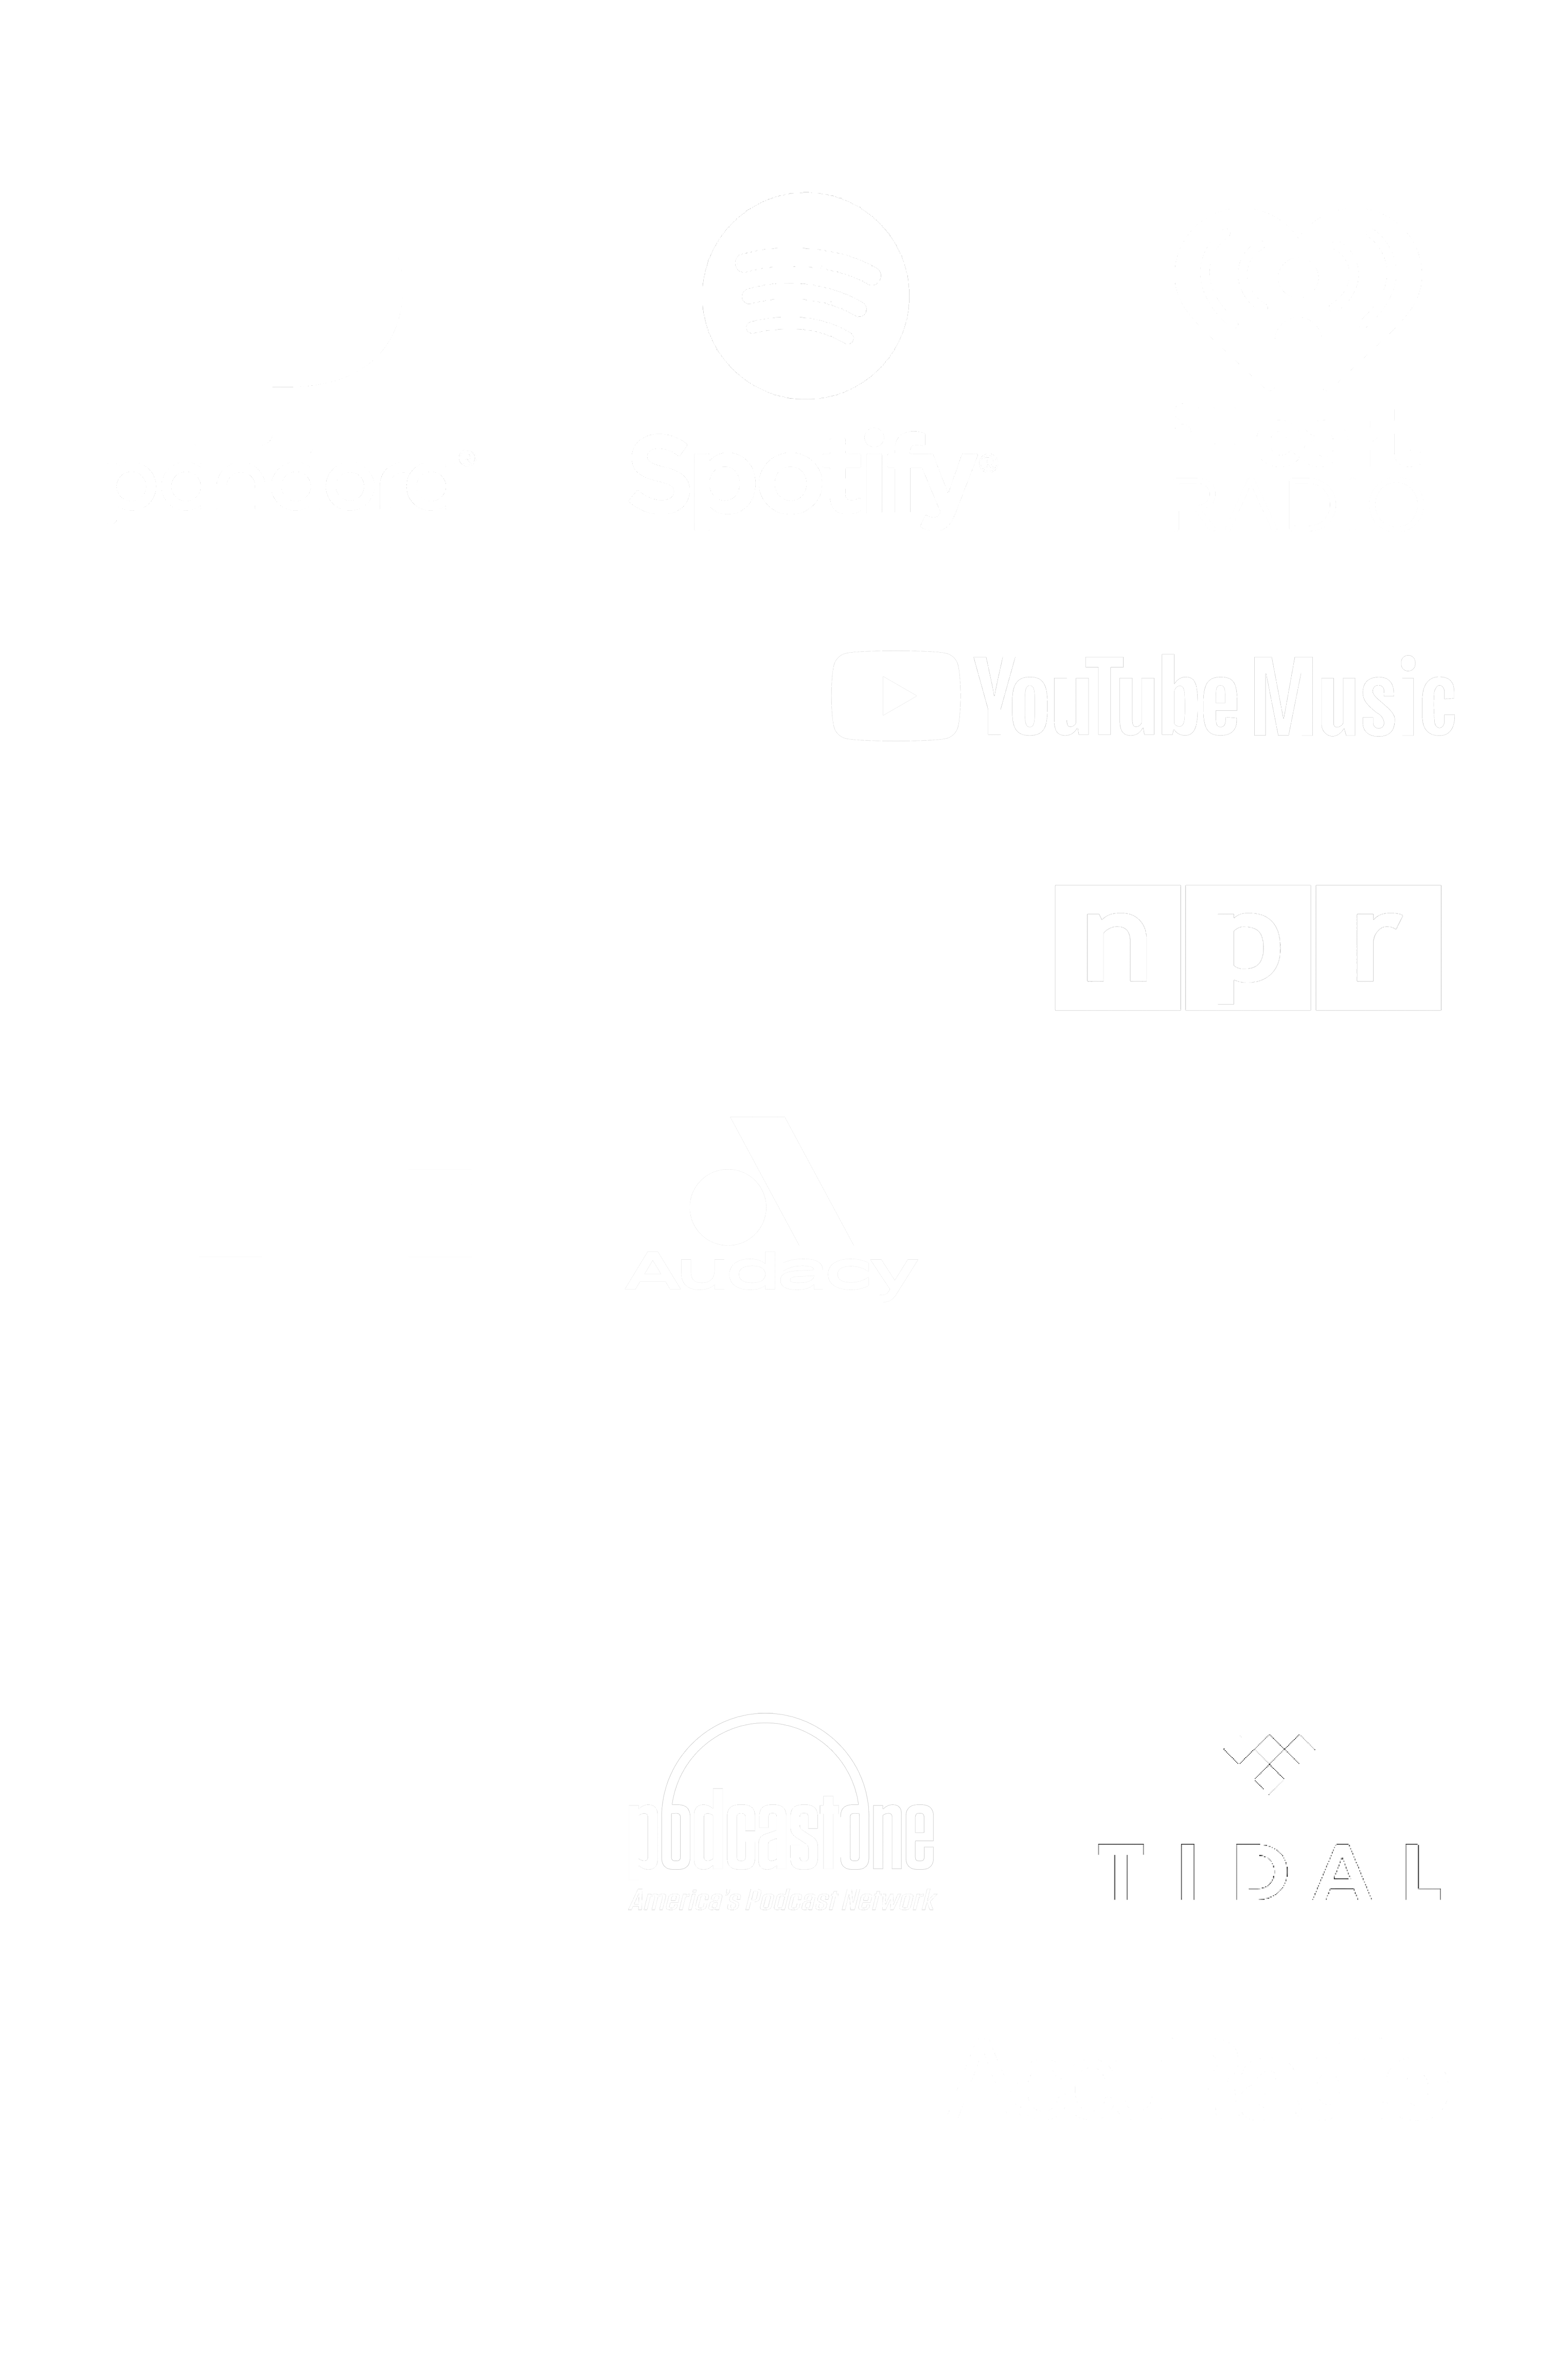 audio plus marketplace logos